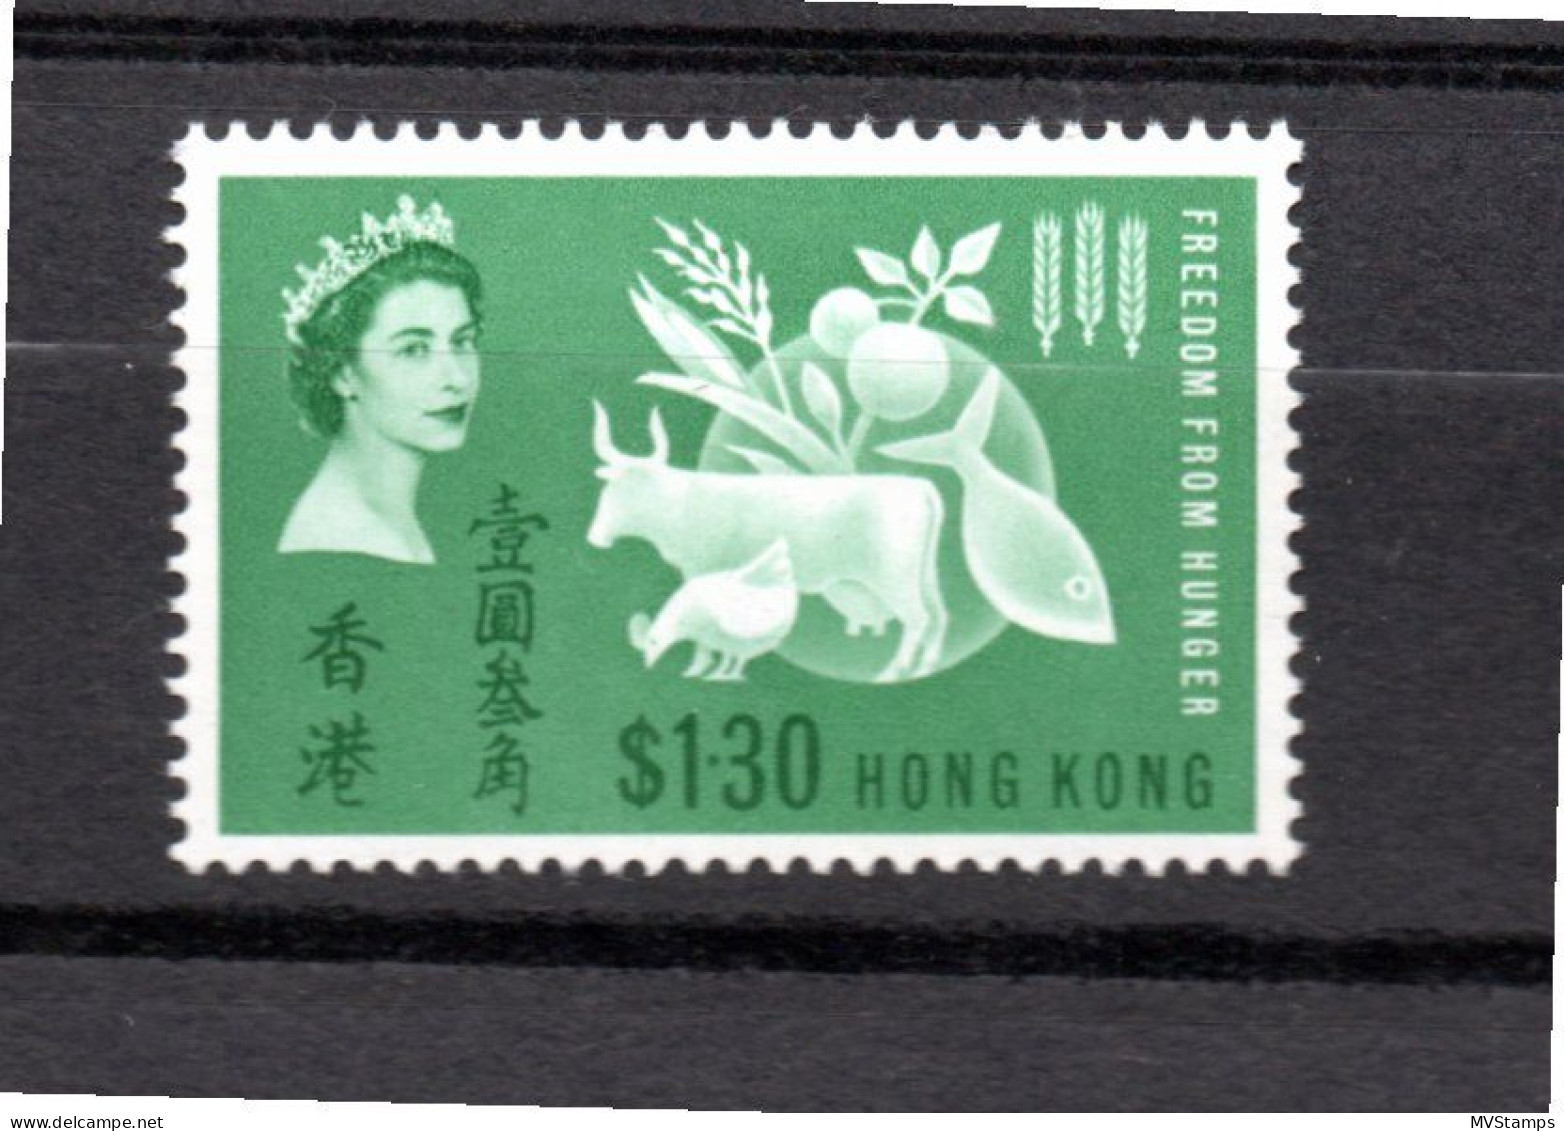 Hong Kong 1963 Hunger/Cow $1.30 Stamp (Michel 211) MNH - Nuovi